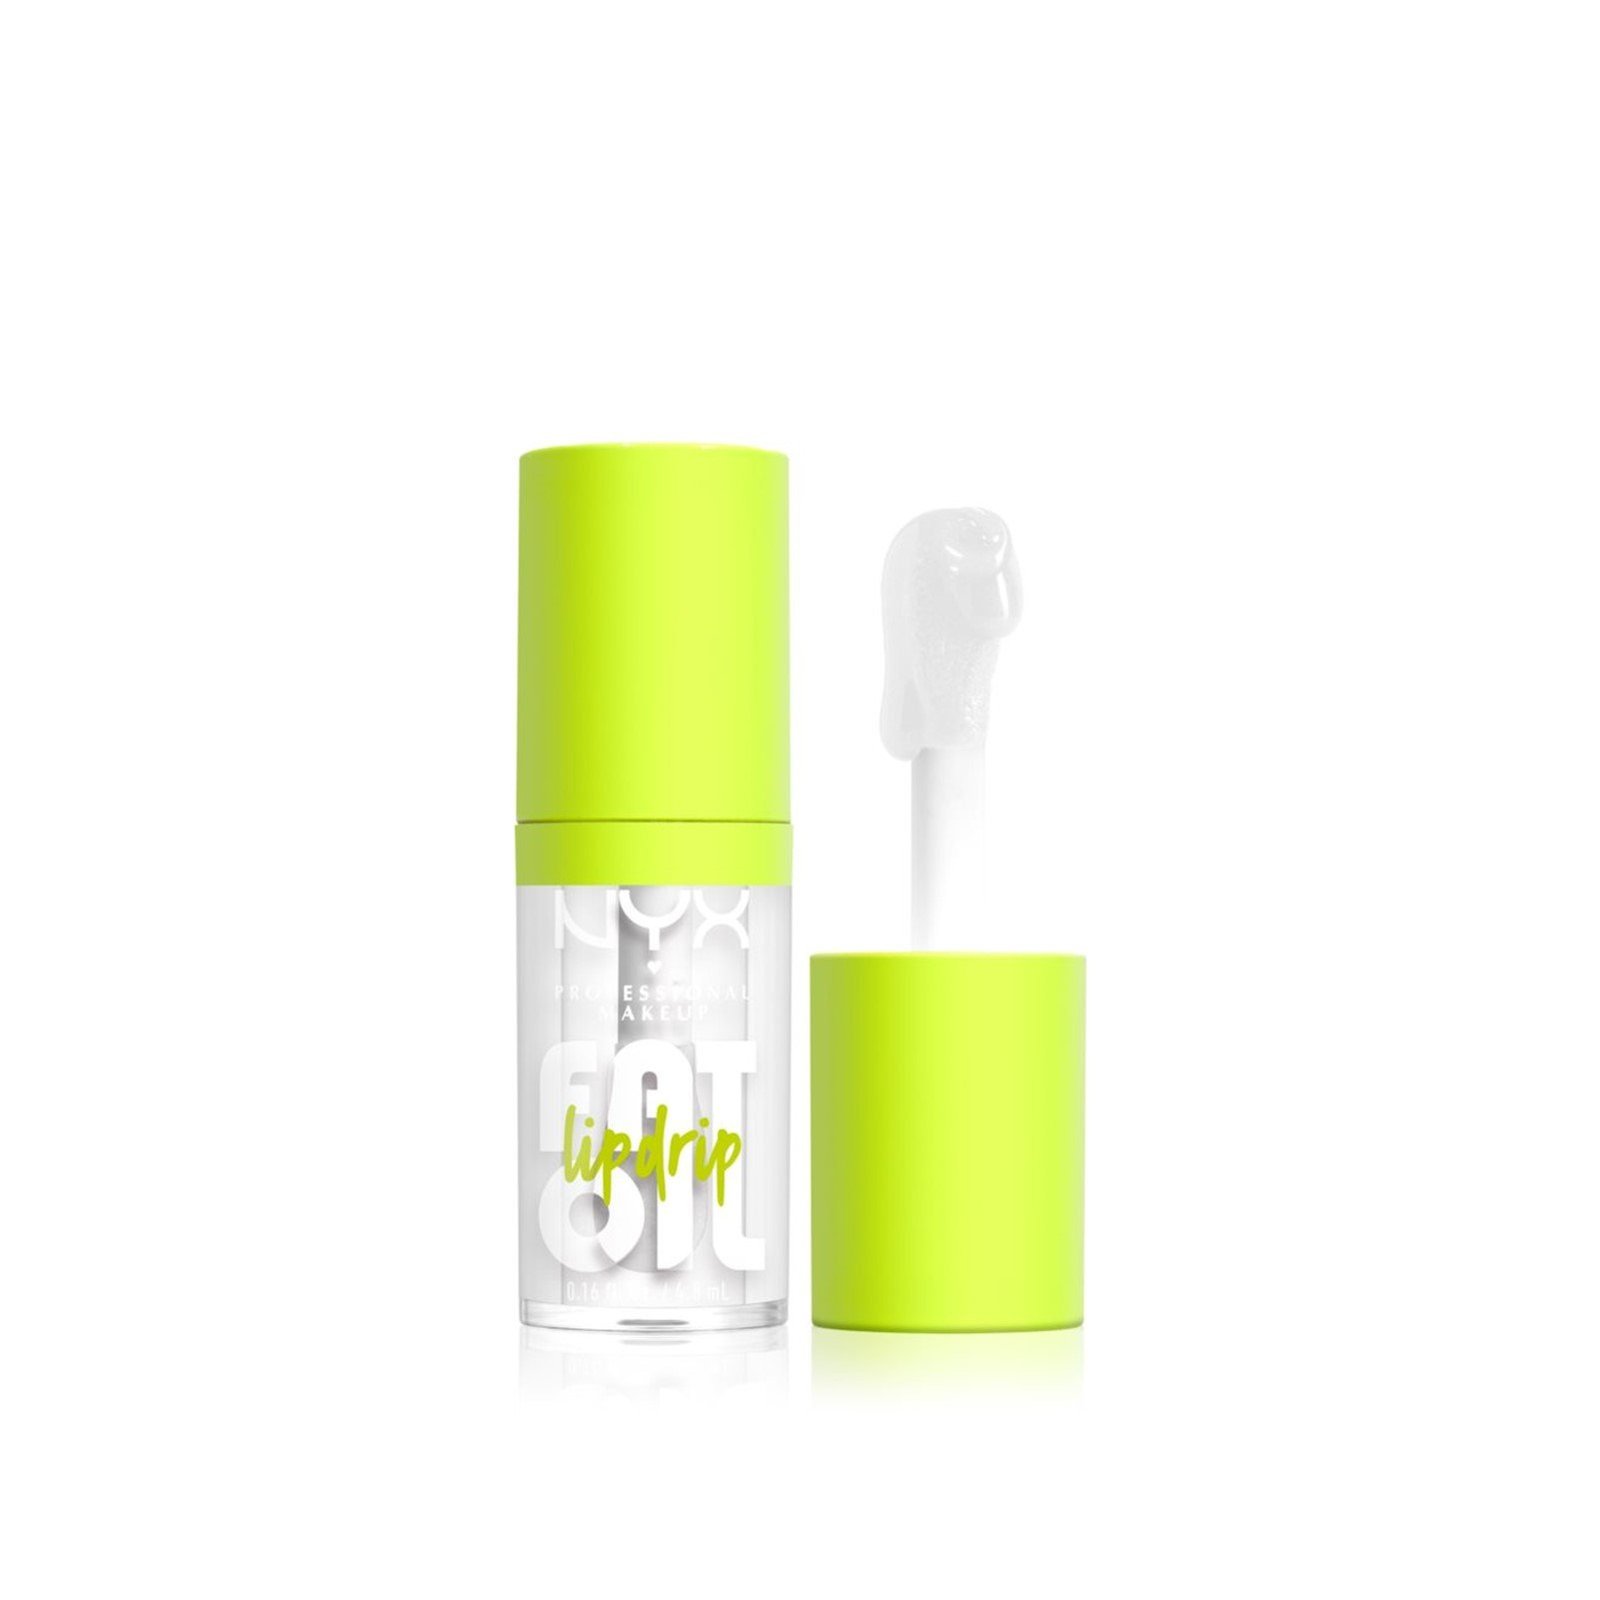 NYX Pro Makeup Fat Oil Lip Drip